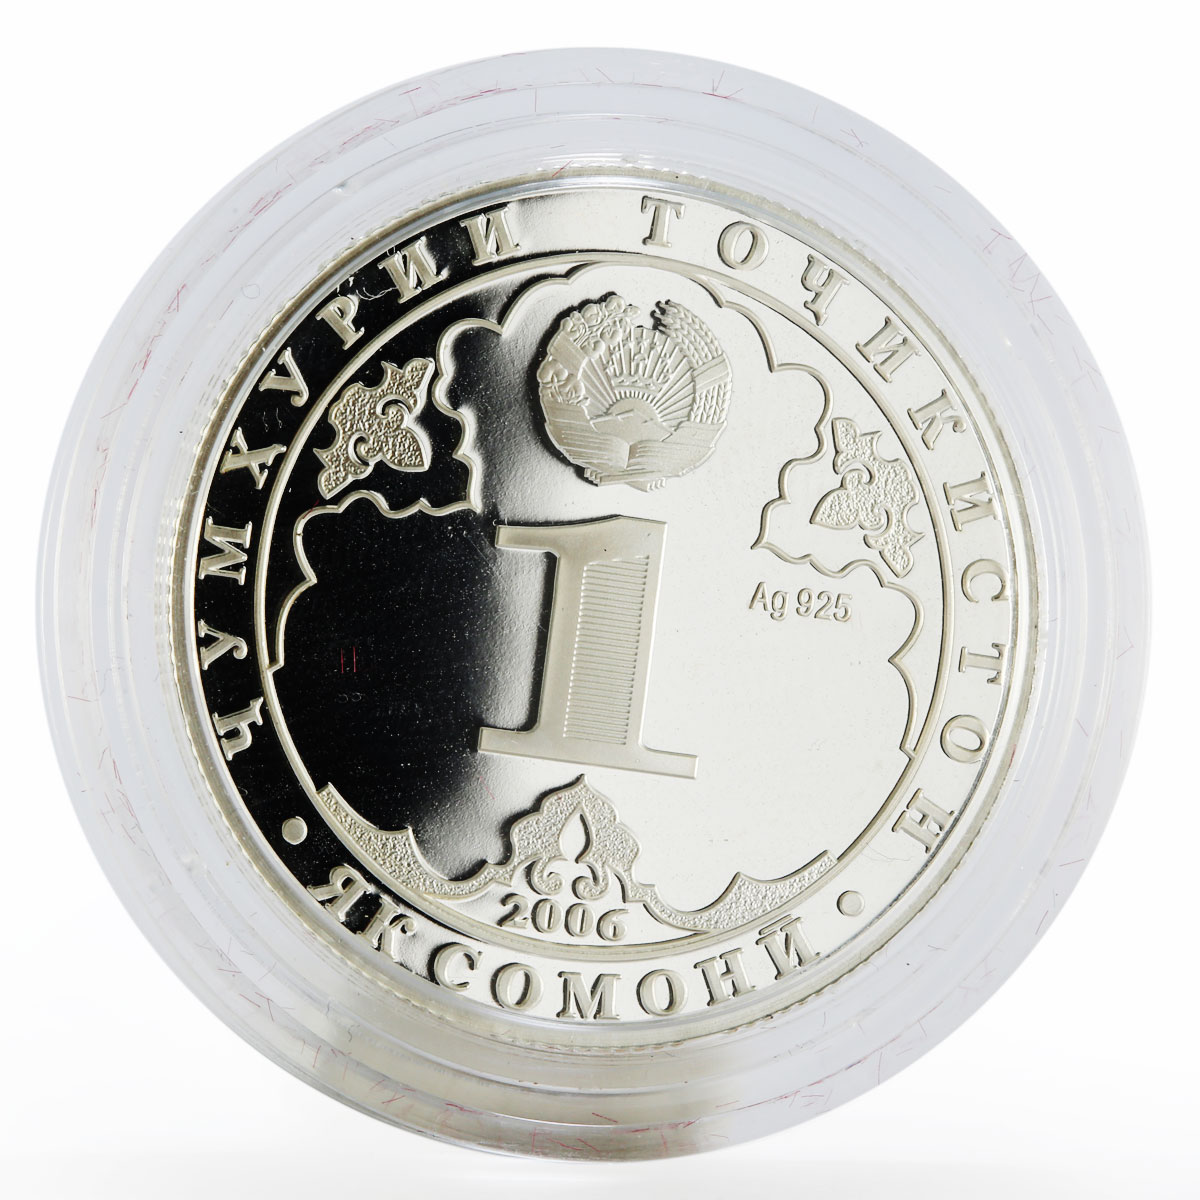 Tajikistan 1 somoni The Year of Aryan Civilization proof silver coin 2006